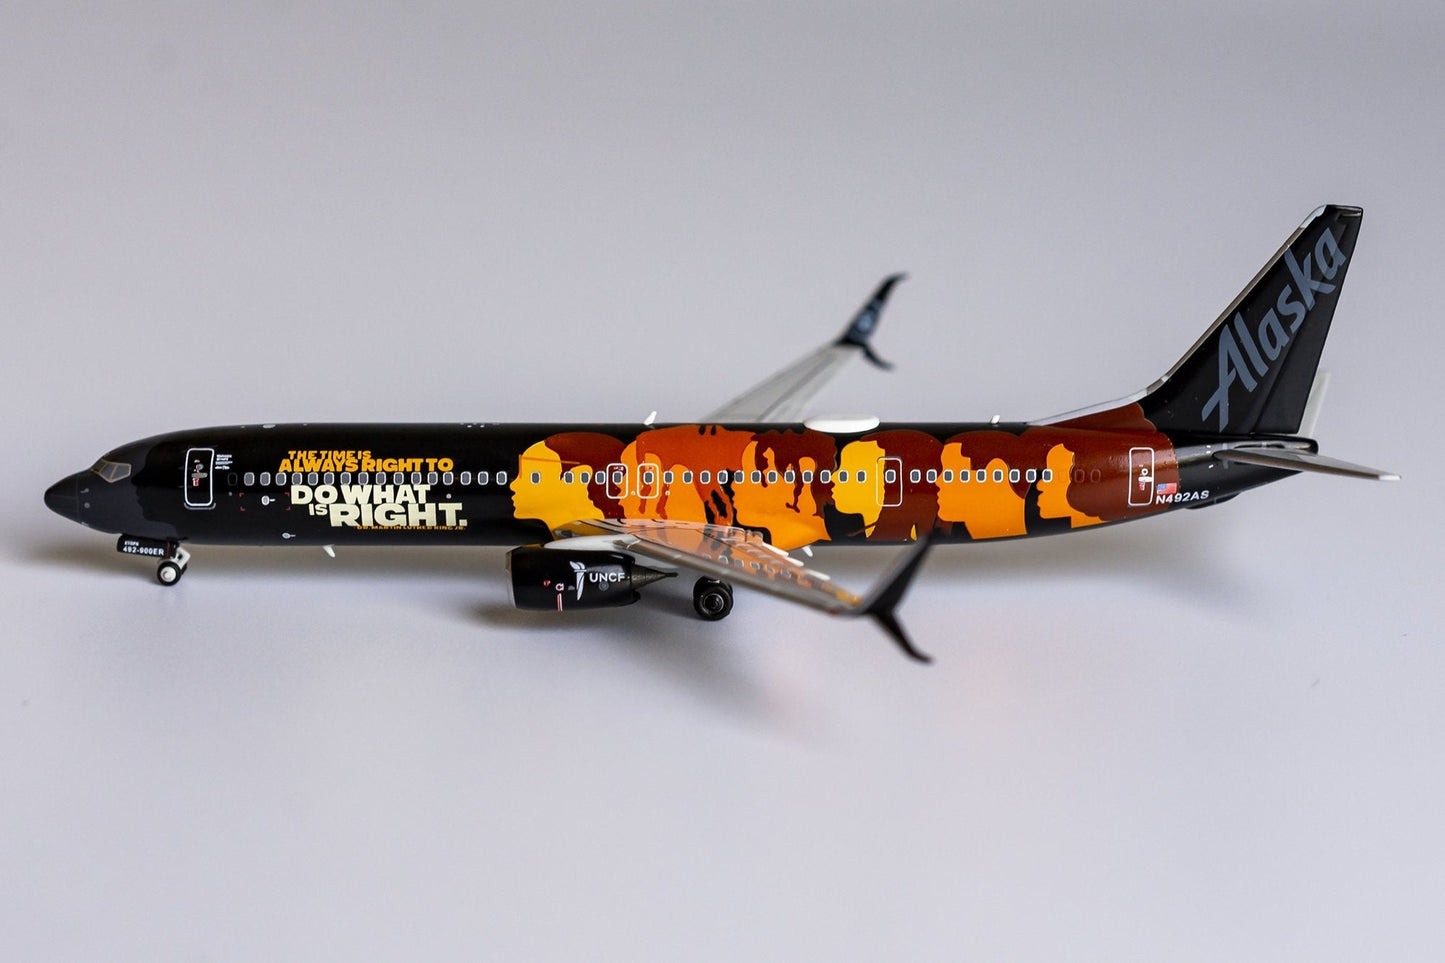 *PREORDER* 1/400 Alaska Airlines B 737-900ER "UNCF - Education Change the World" NG Models 79003 - Midwest Model Store